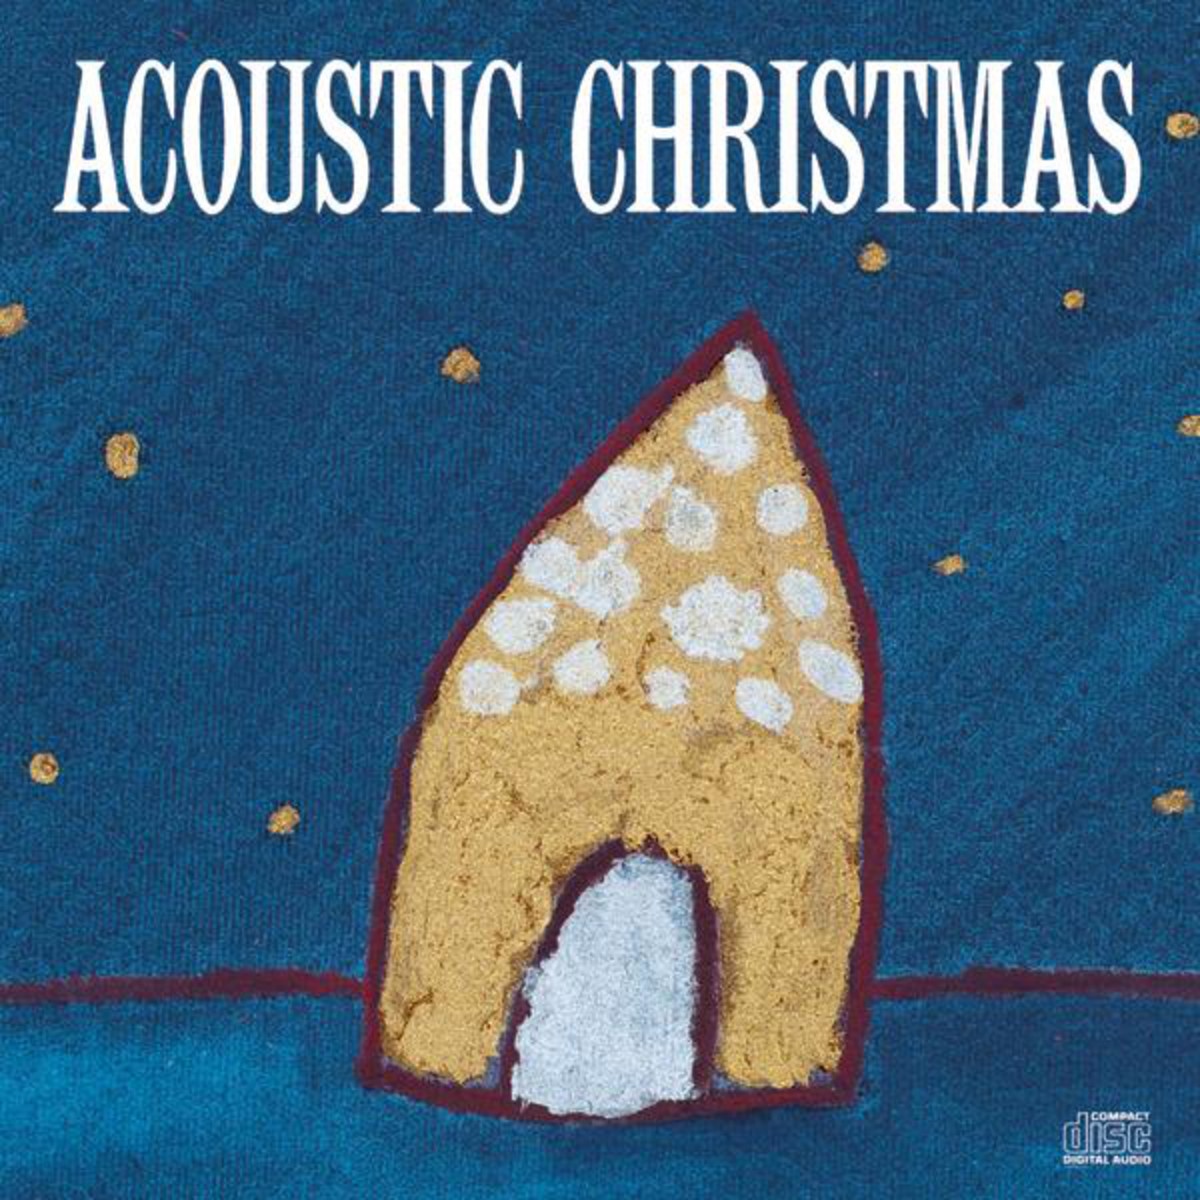 O Come All Ye Faithful (Acoustic Christmas Album Version) - unplug